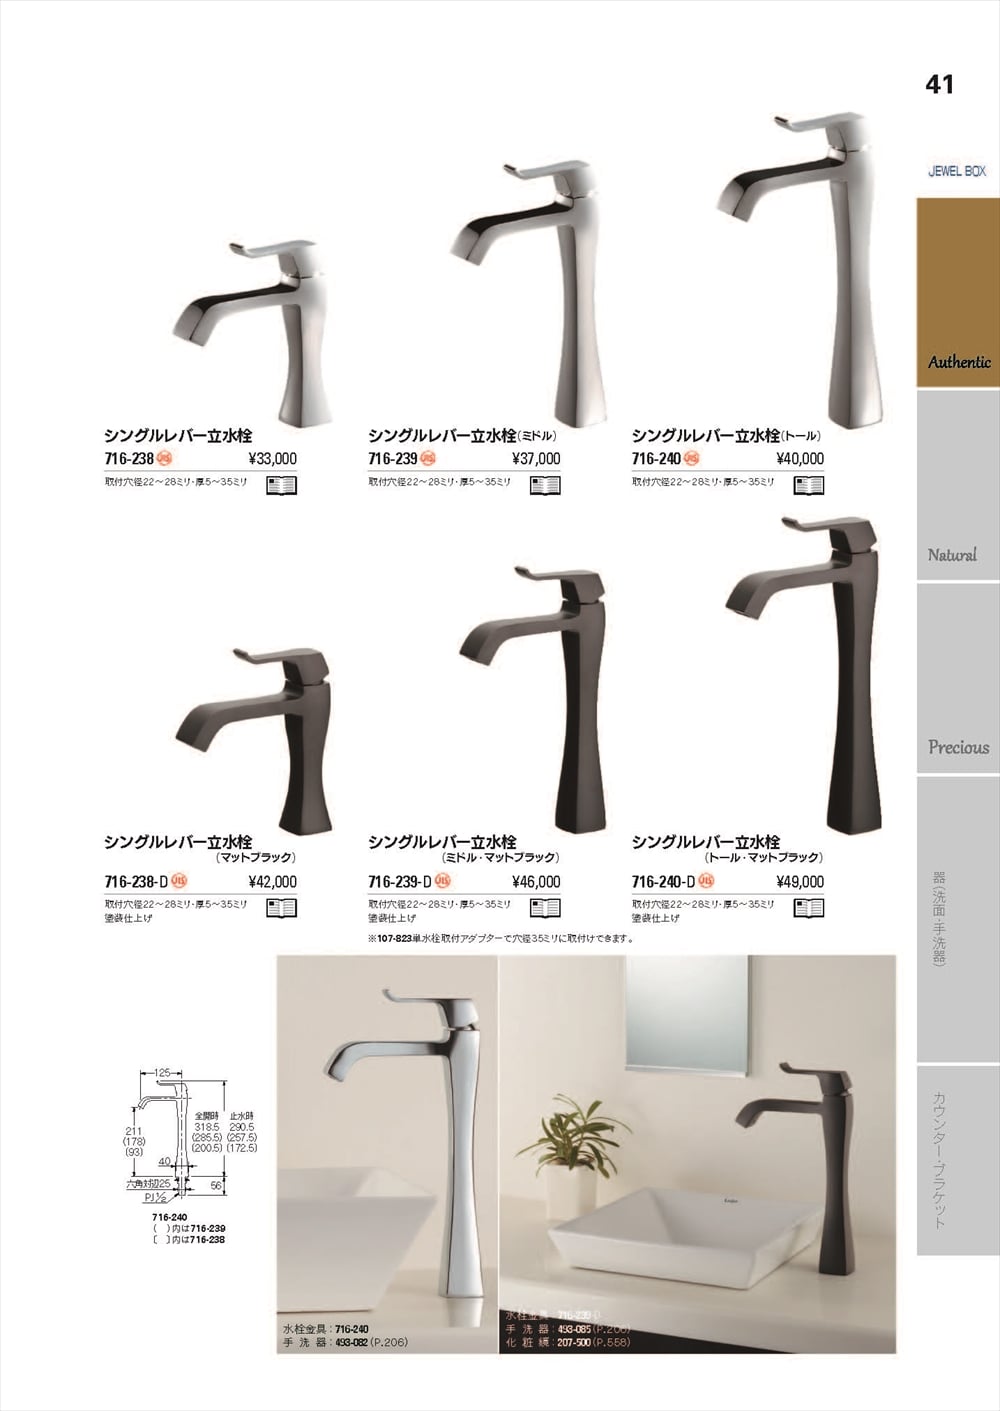  KAKUDAI カクダイ 単水栓 厨房用立形シャワー水栓 - 5